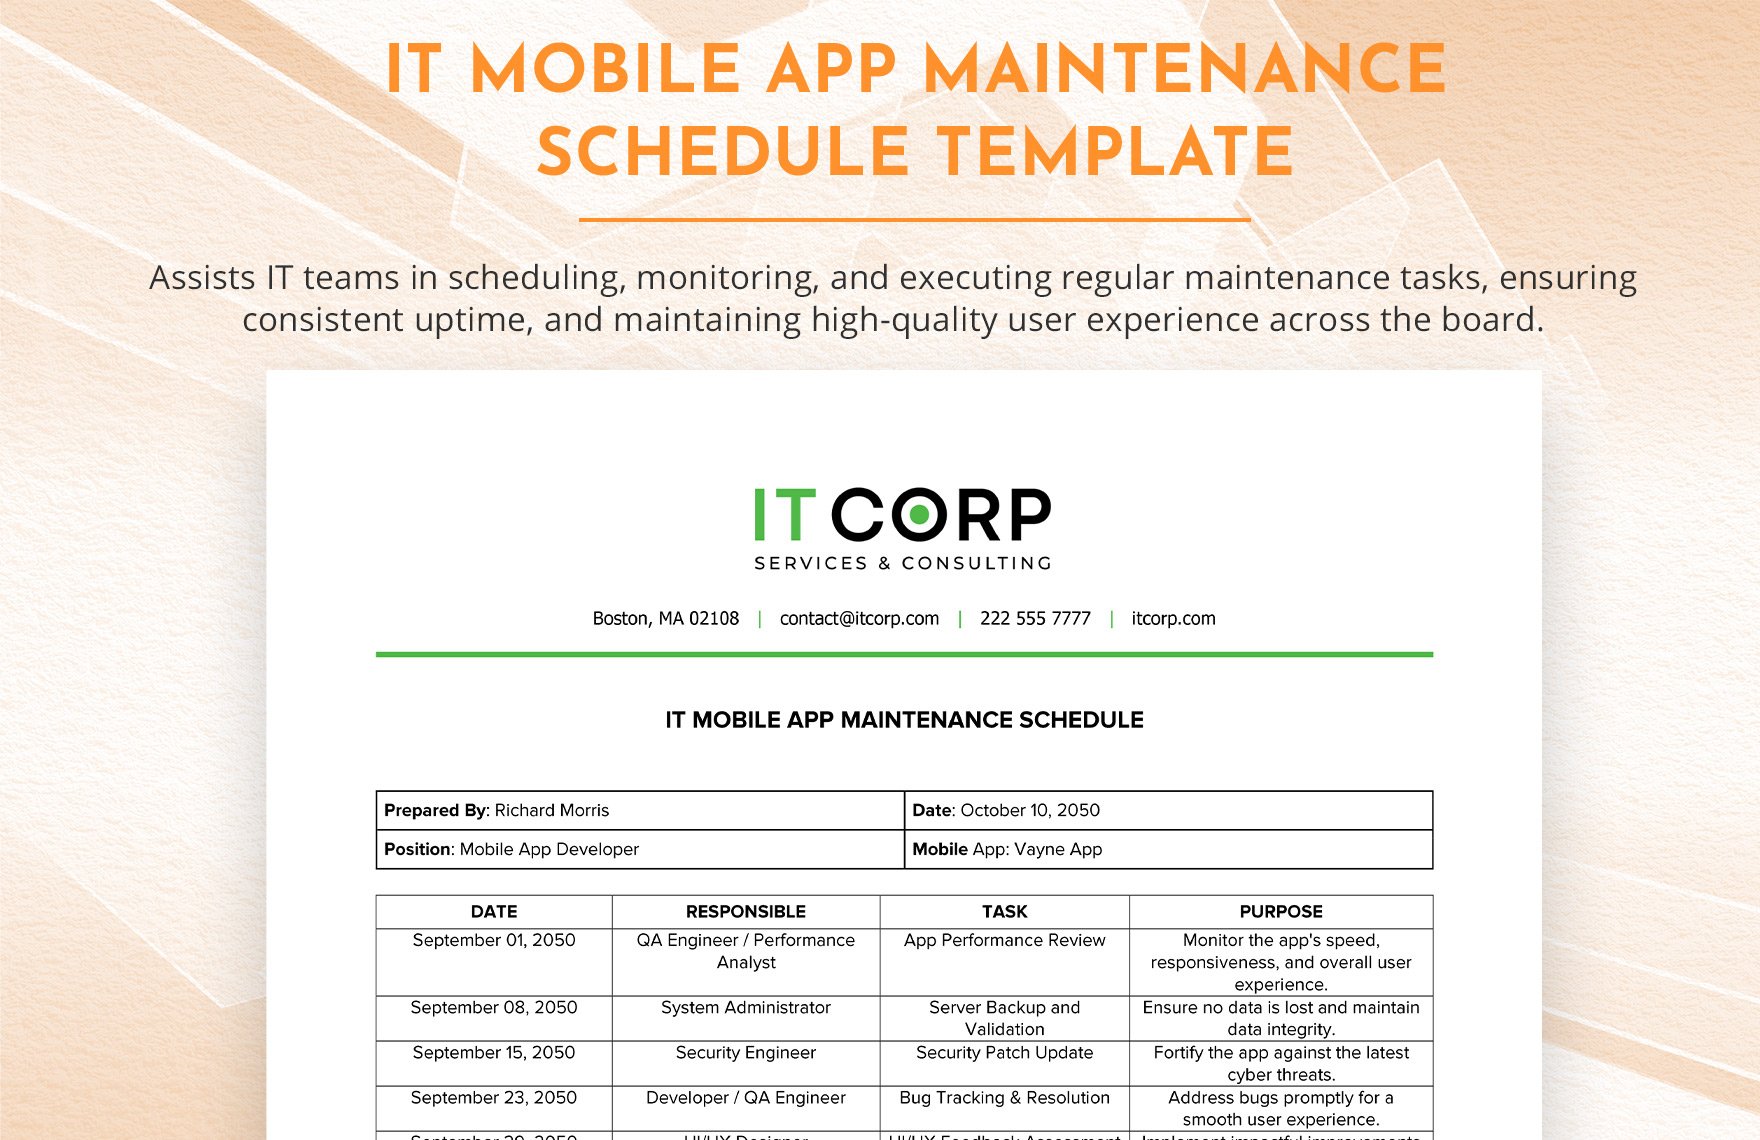 IT Mobile App Maintenance Schedule Template